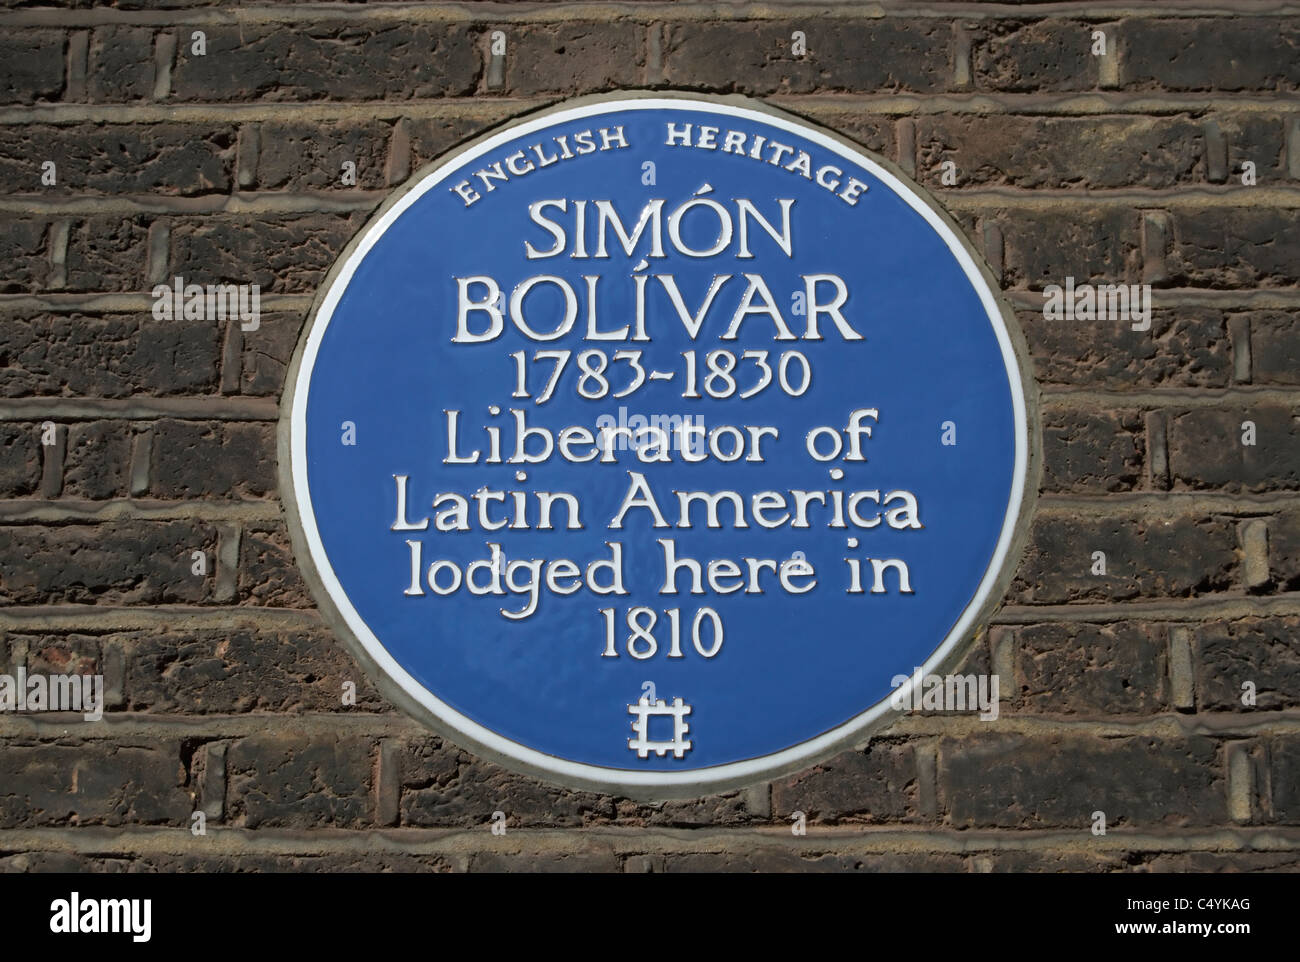 english heritage blue plaque marking a lodging of simon bolivar, marylebone, london, england Stock Photo